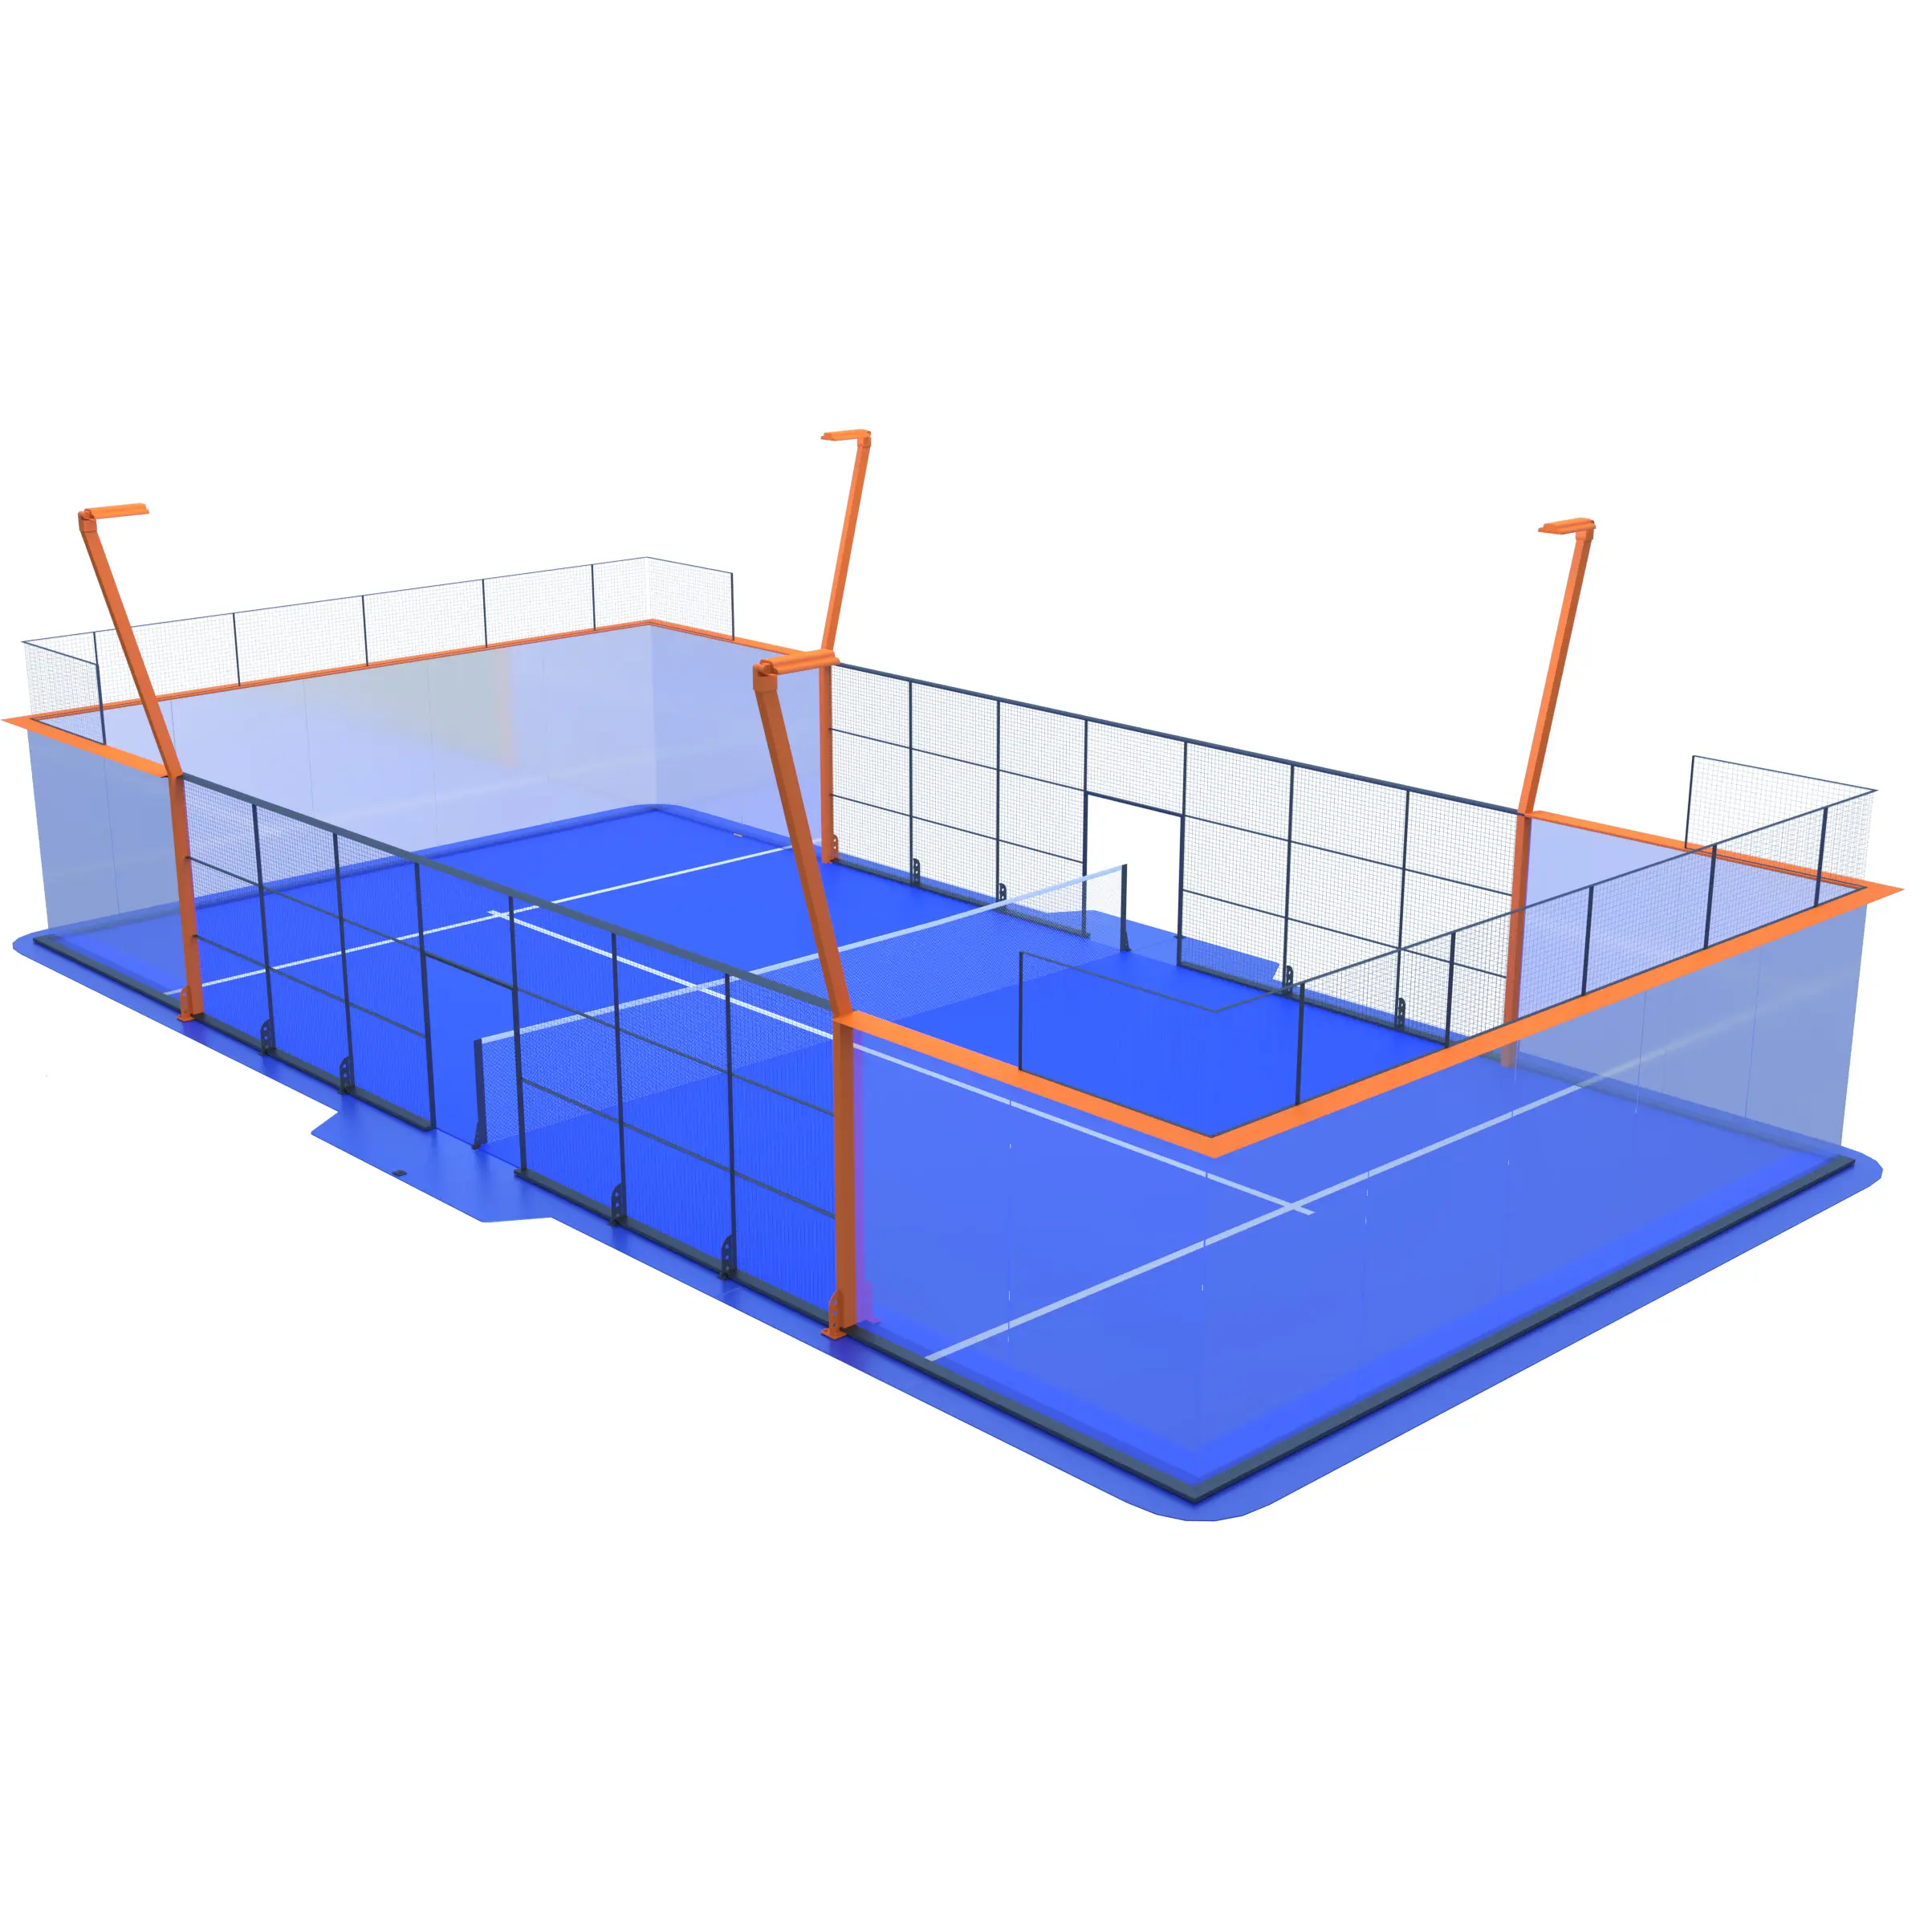 Jaring pagar lapangan olahraga dapat ditiup, pagar rantai tenis meja basket untuk permainan olahraga